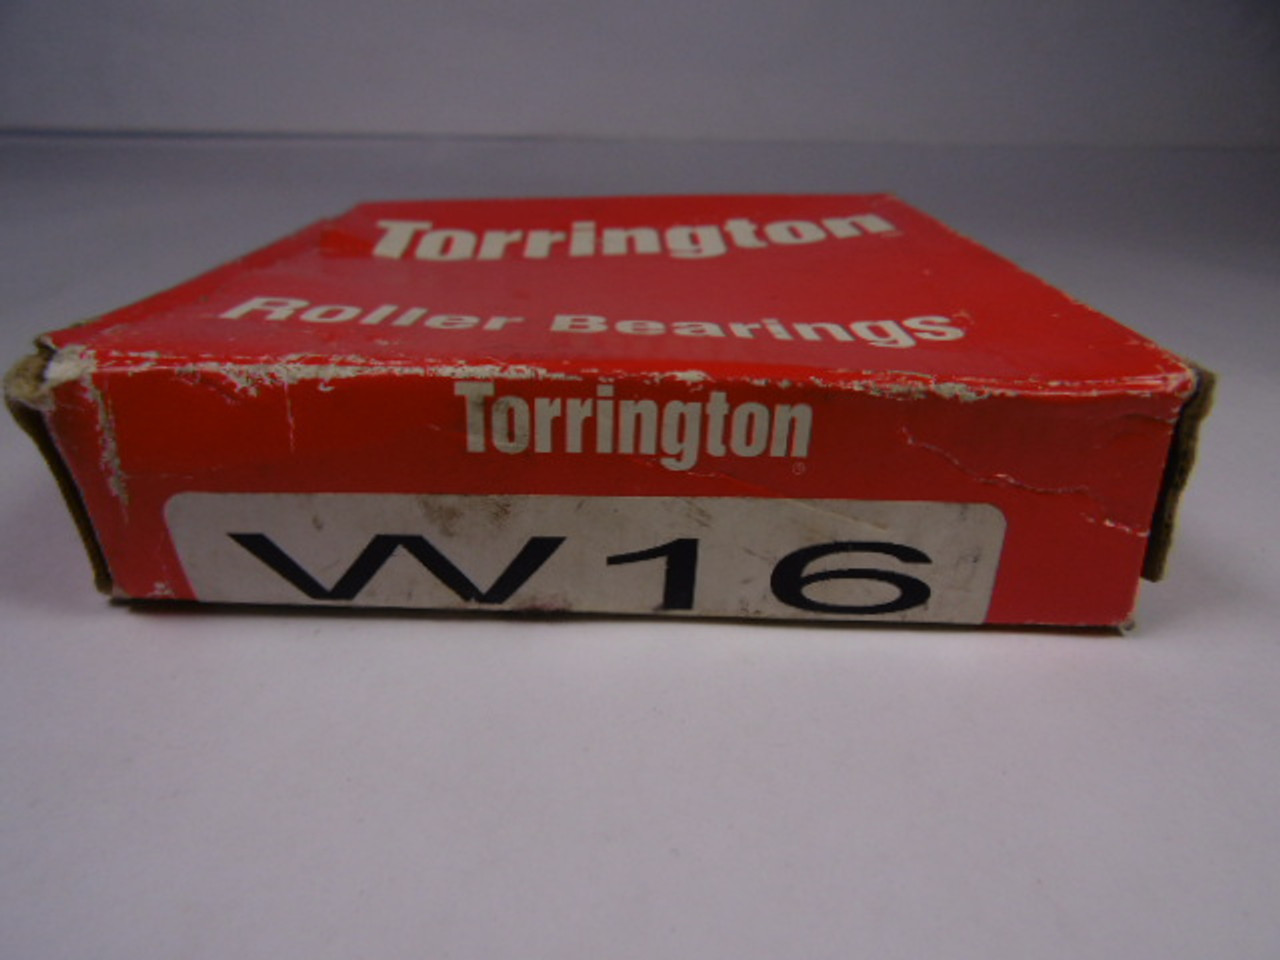 Torrington W16 Bearing Lock Washer ! NEW !